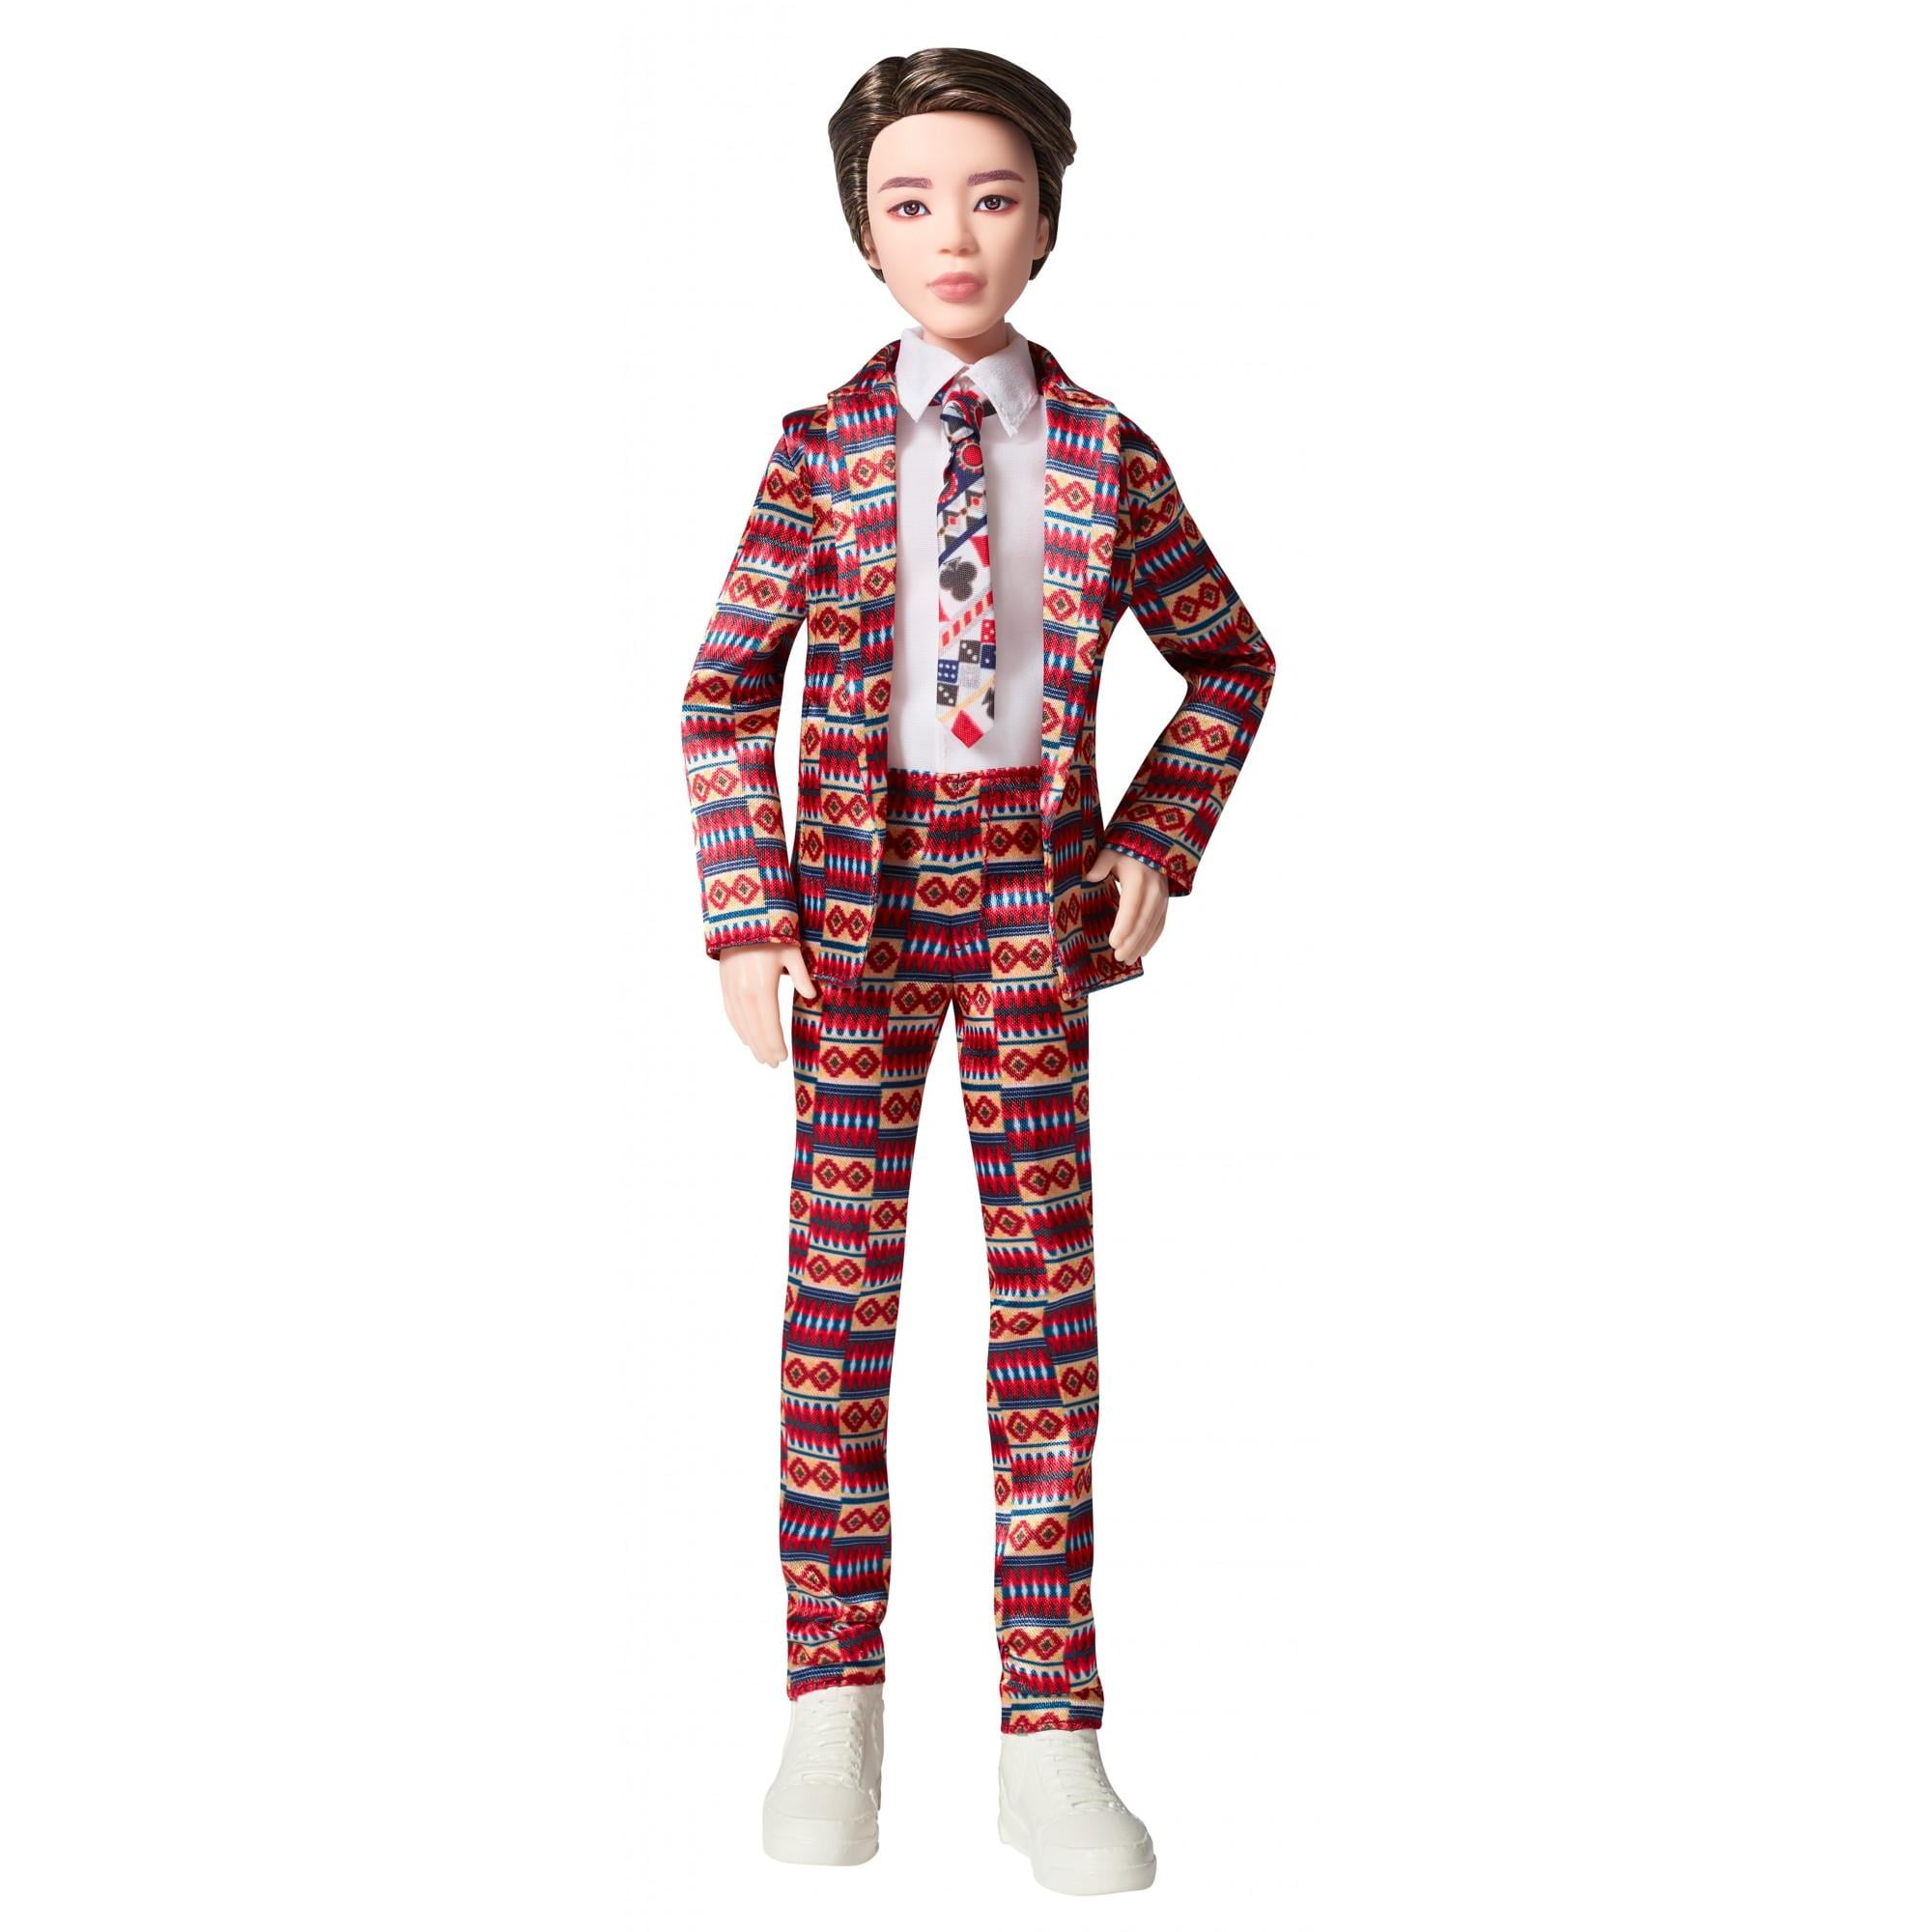 BTS Idol Jimin Doll Mattel GKC93 Fashion Bangtan for sale online 